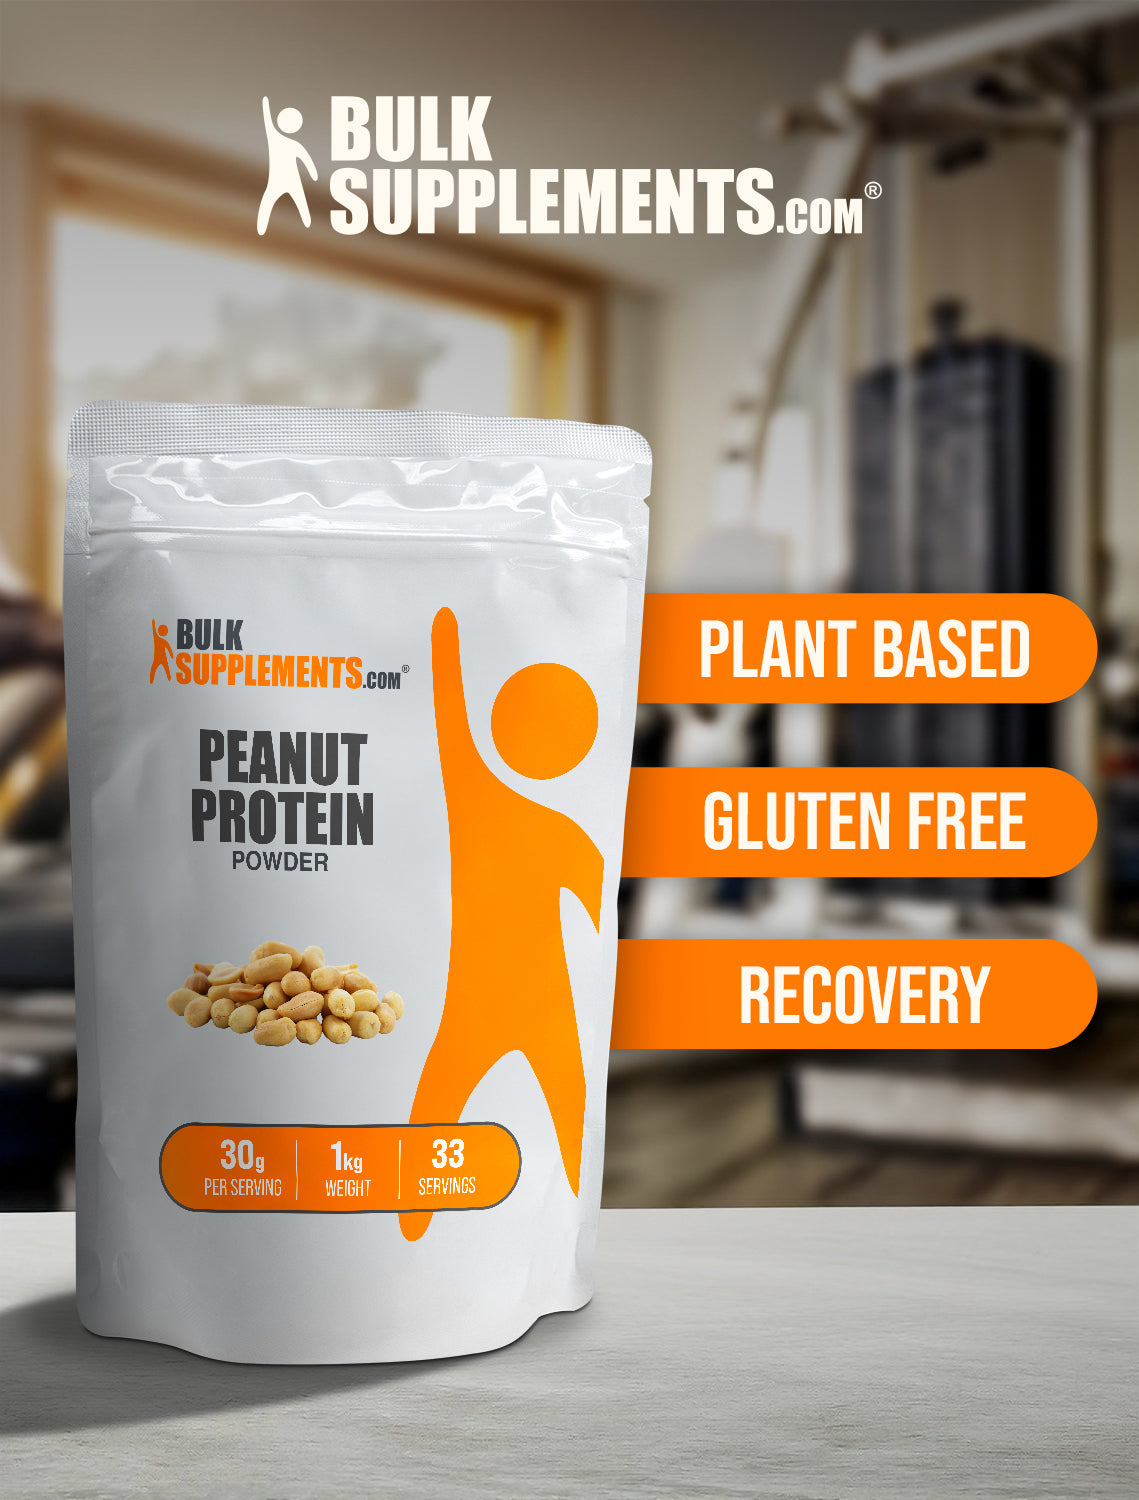 Peanut protein powder 1kg keywords image